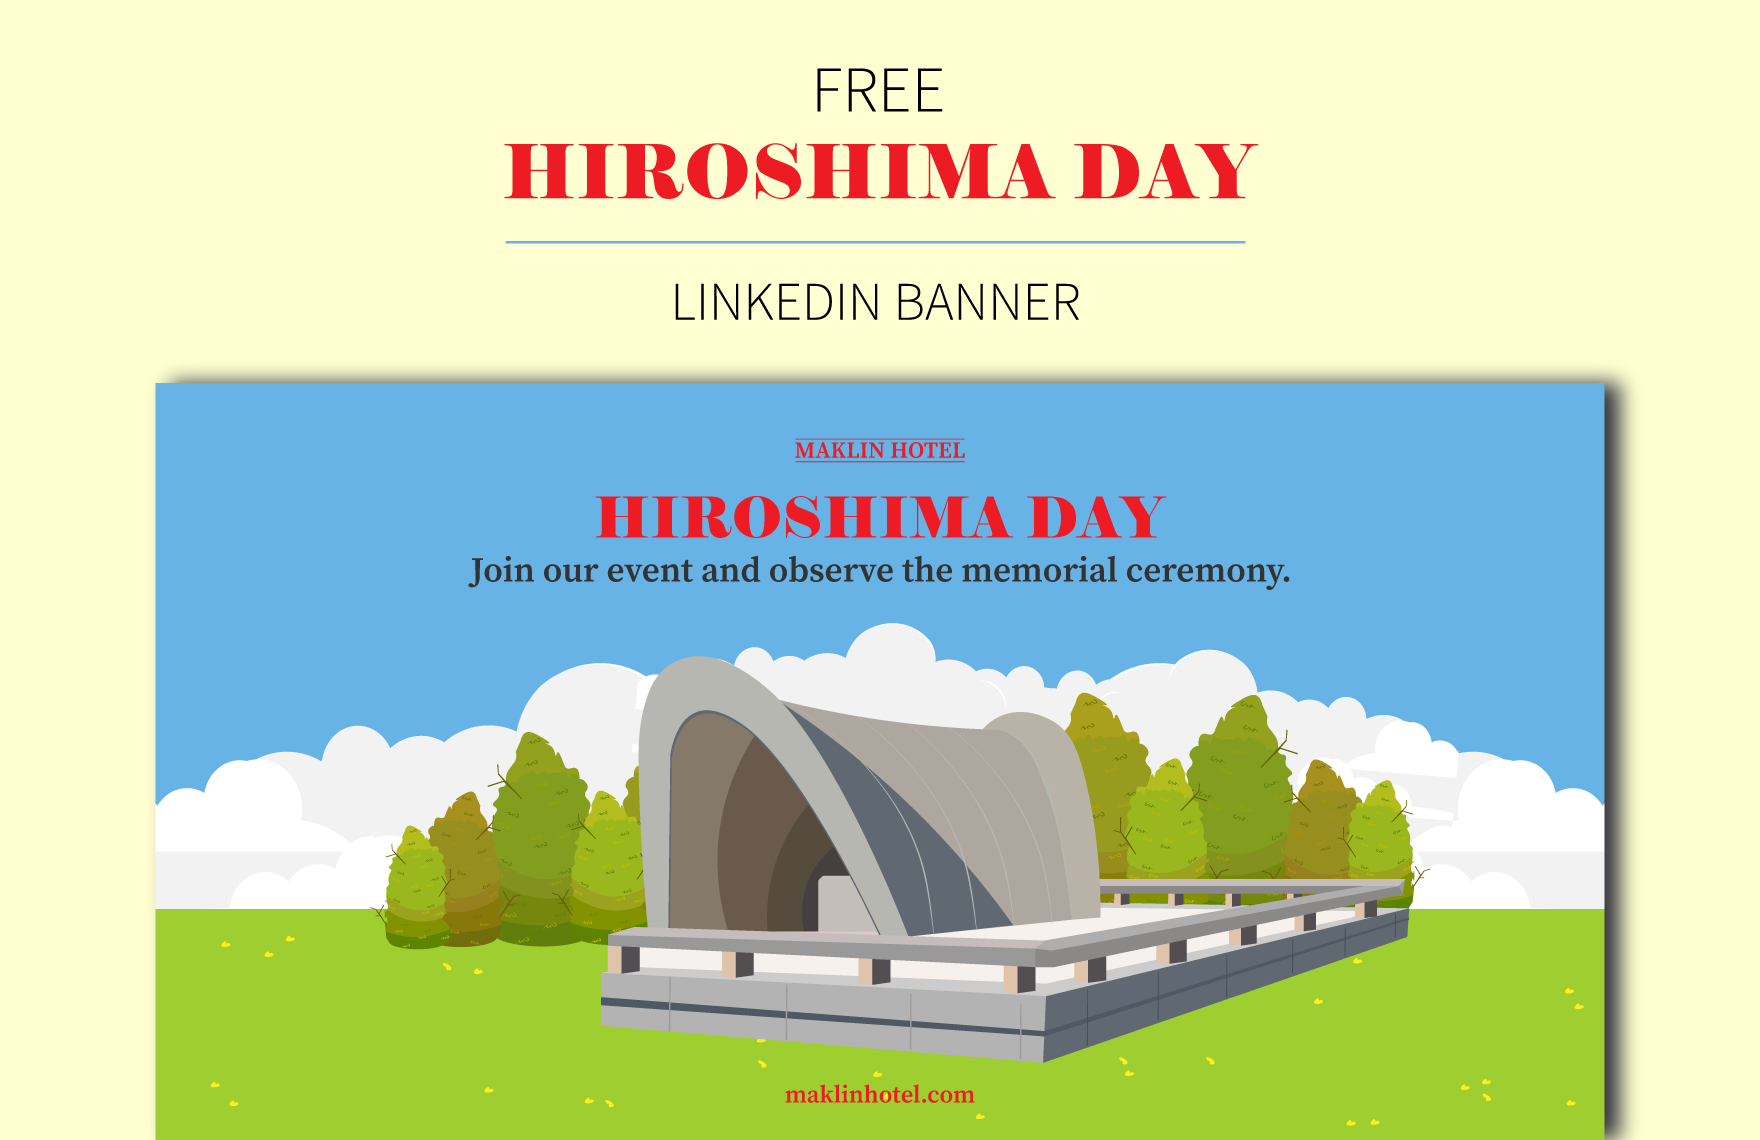 Free Hiroshima Day  Linkedin Banner in Illustrator, PSD, EPS, SVG, JPG, PNG